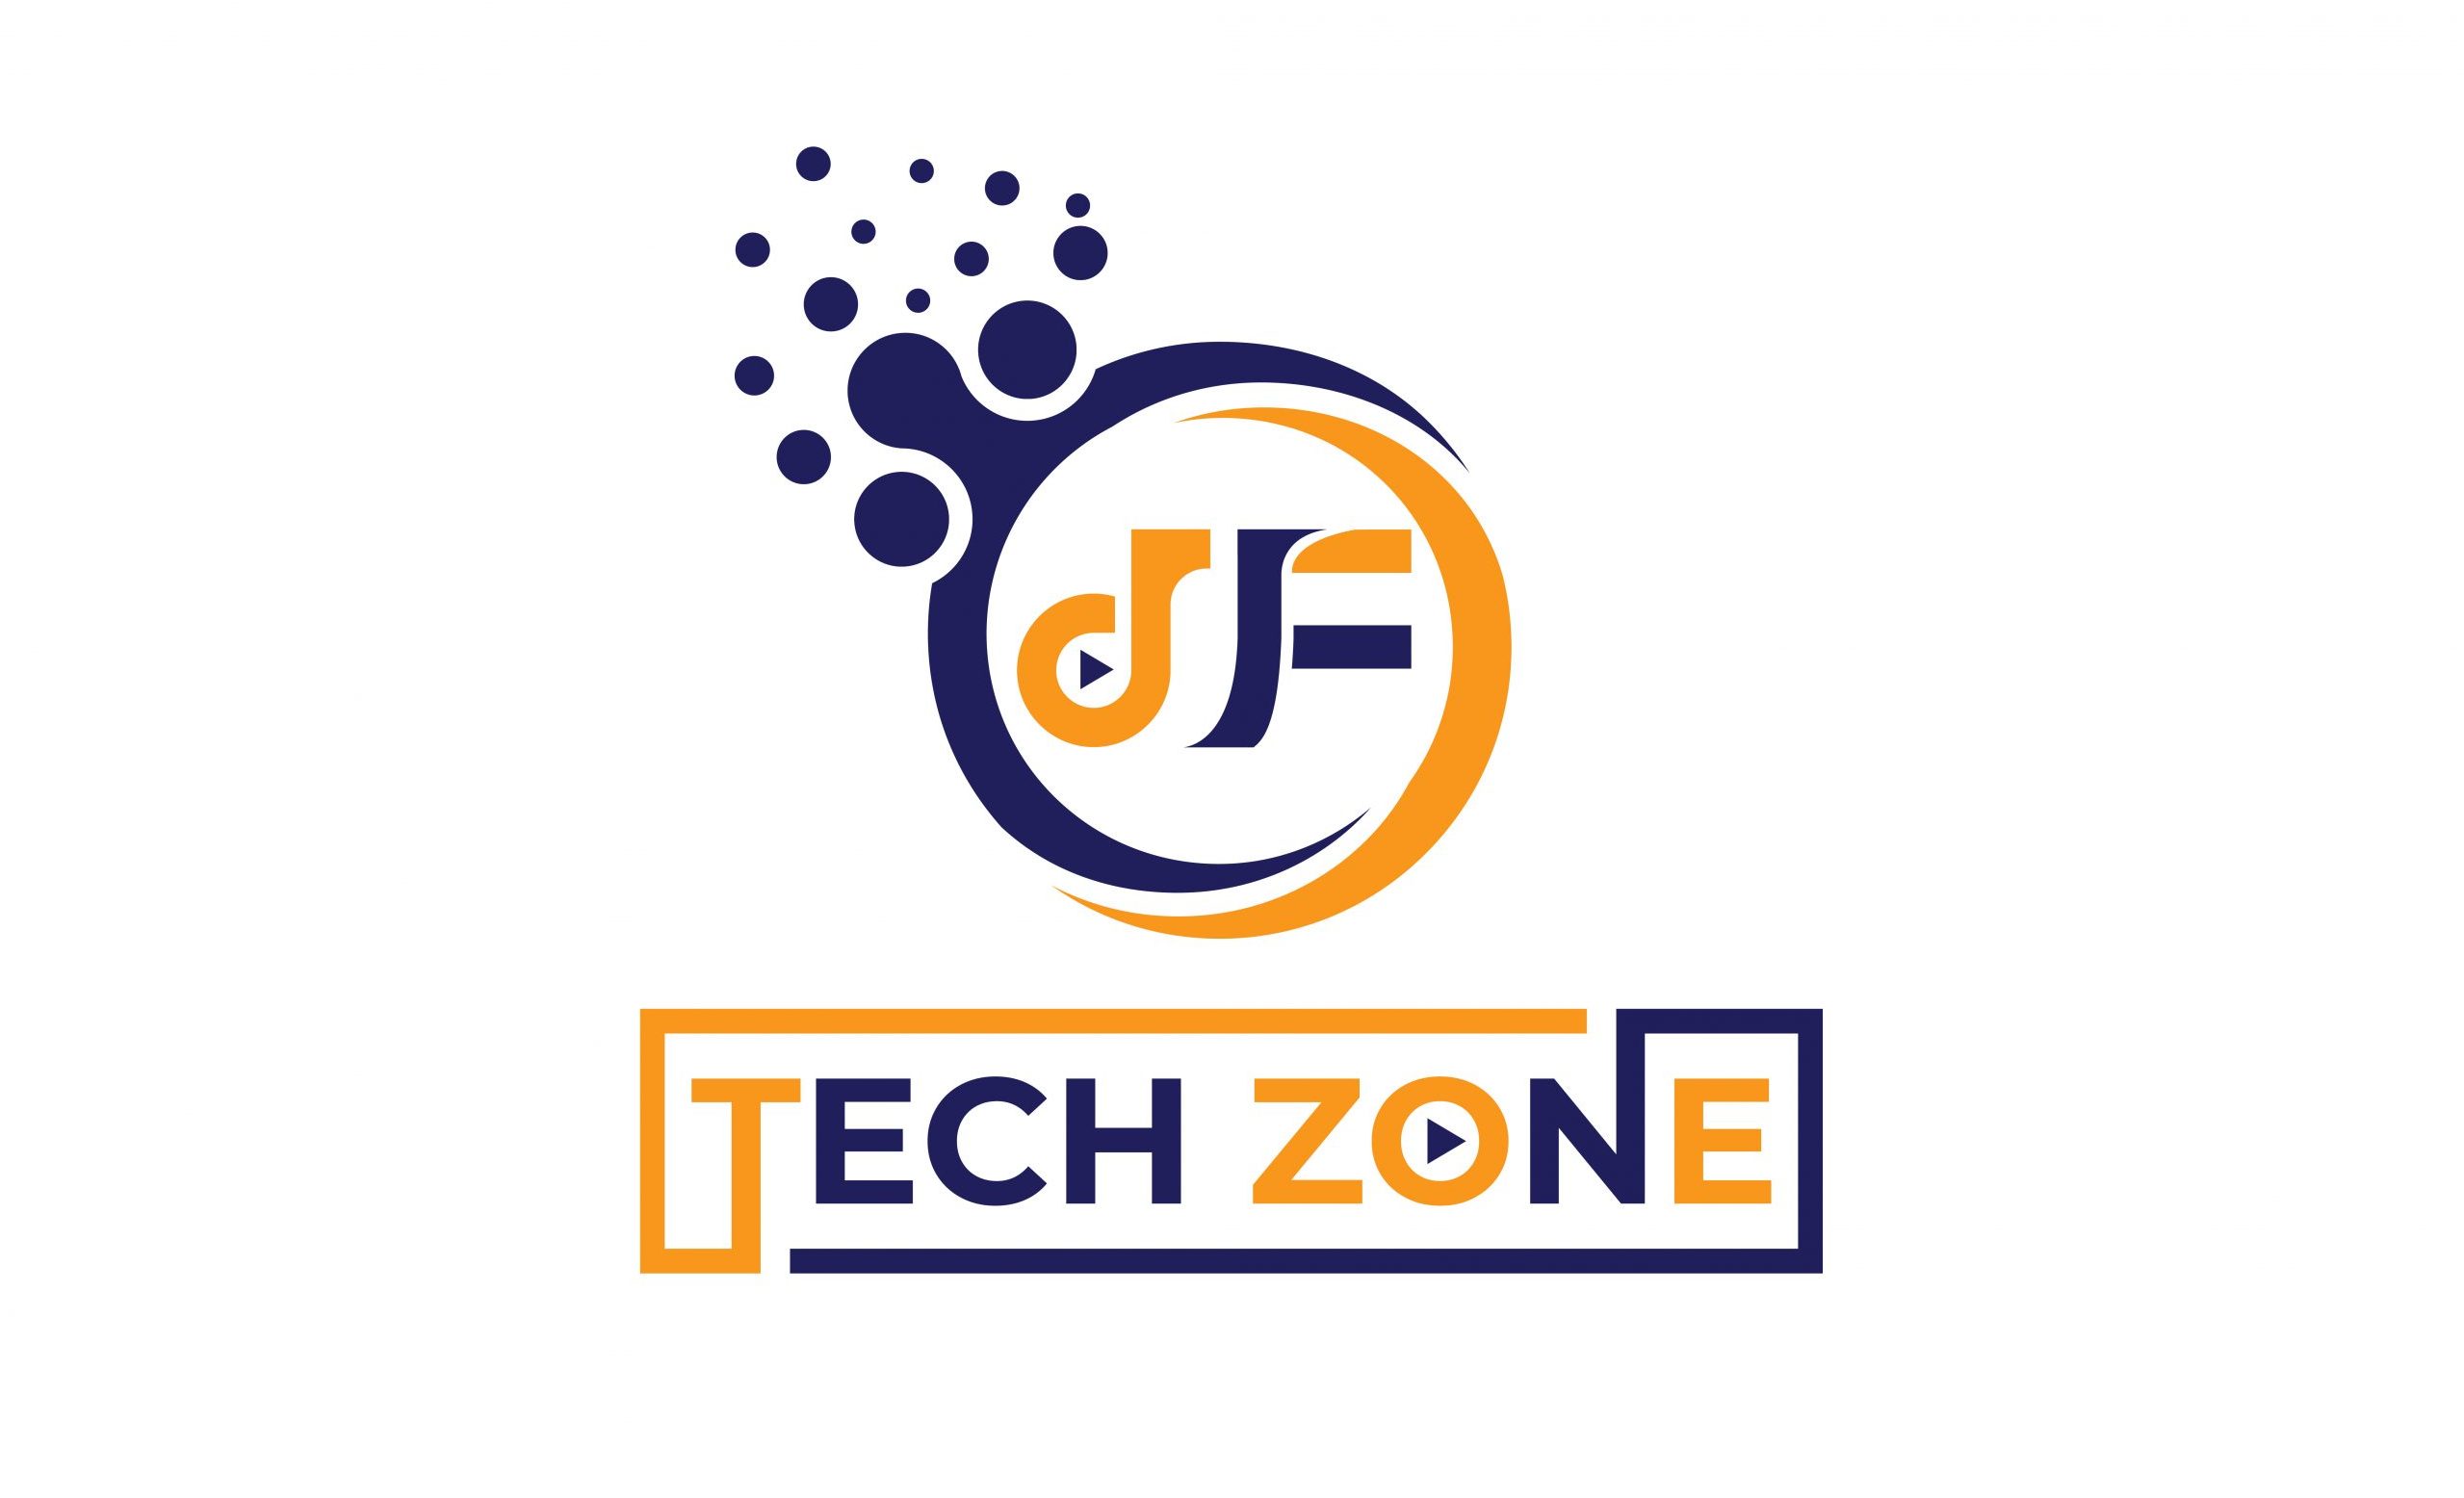 JF Tech Zone